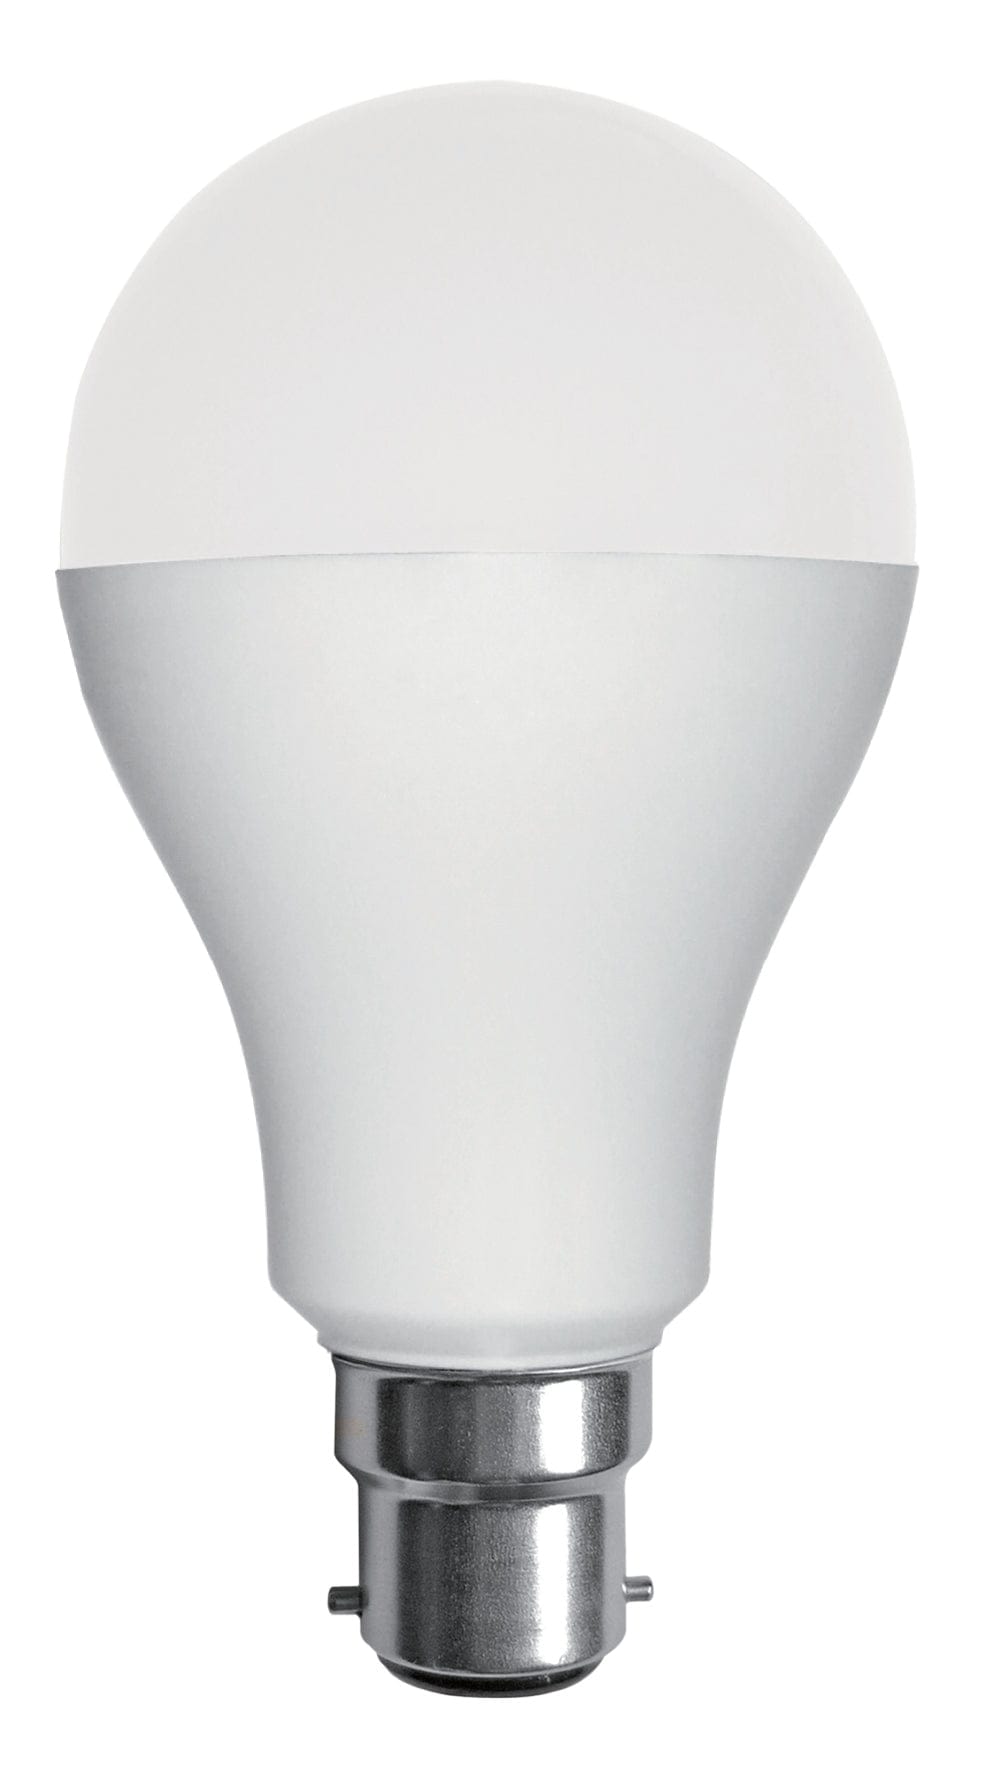 15w LED B22, E27 A60 Globe Warm White 3000k, Daylight 5000k